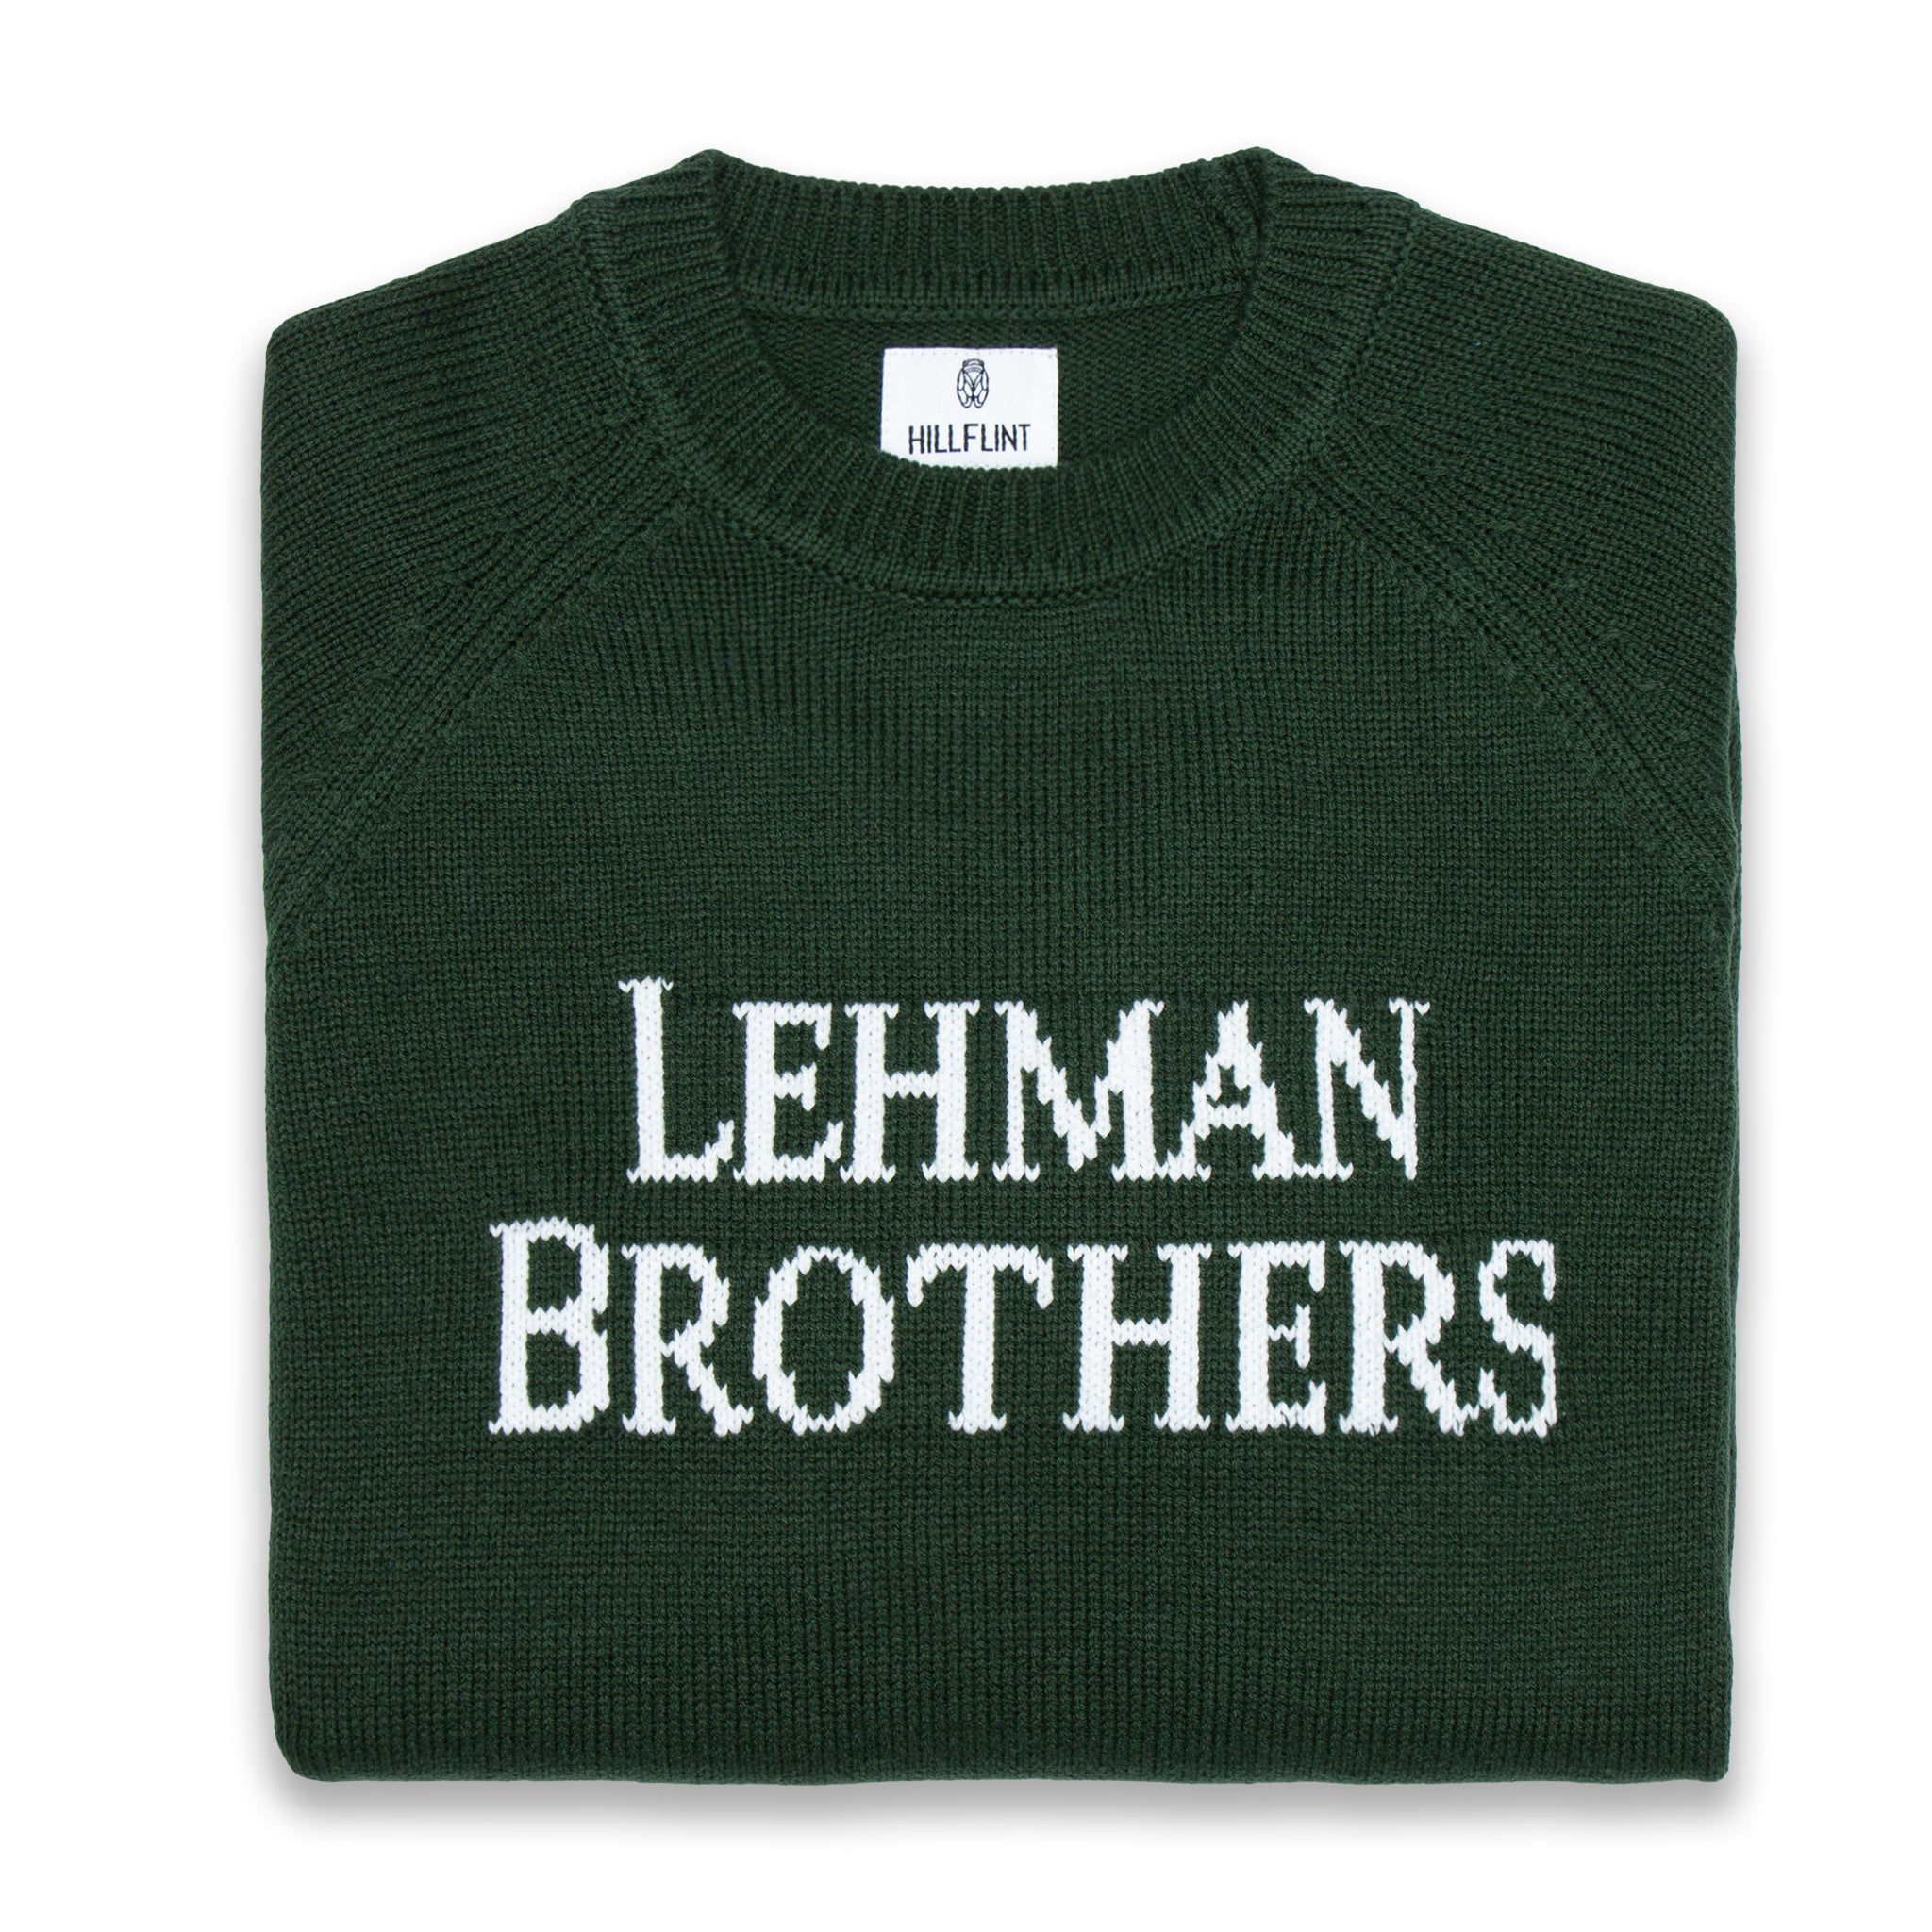 Lehman Brothers | Sweater